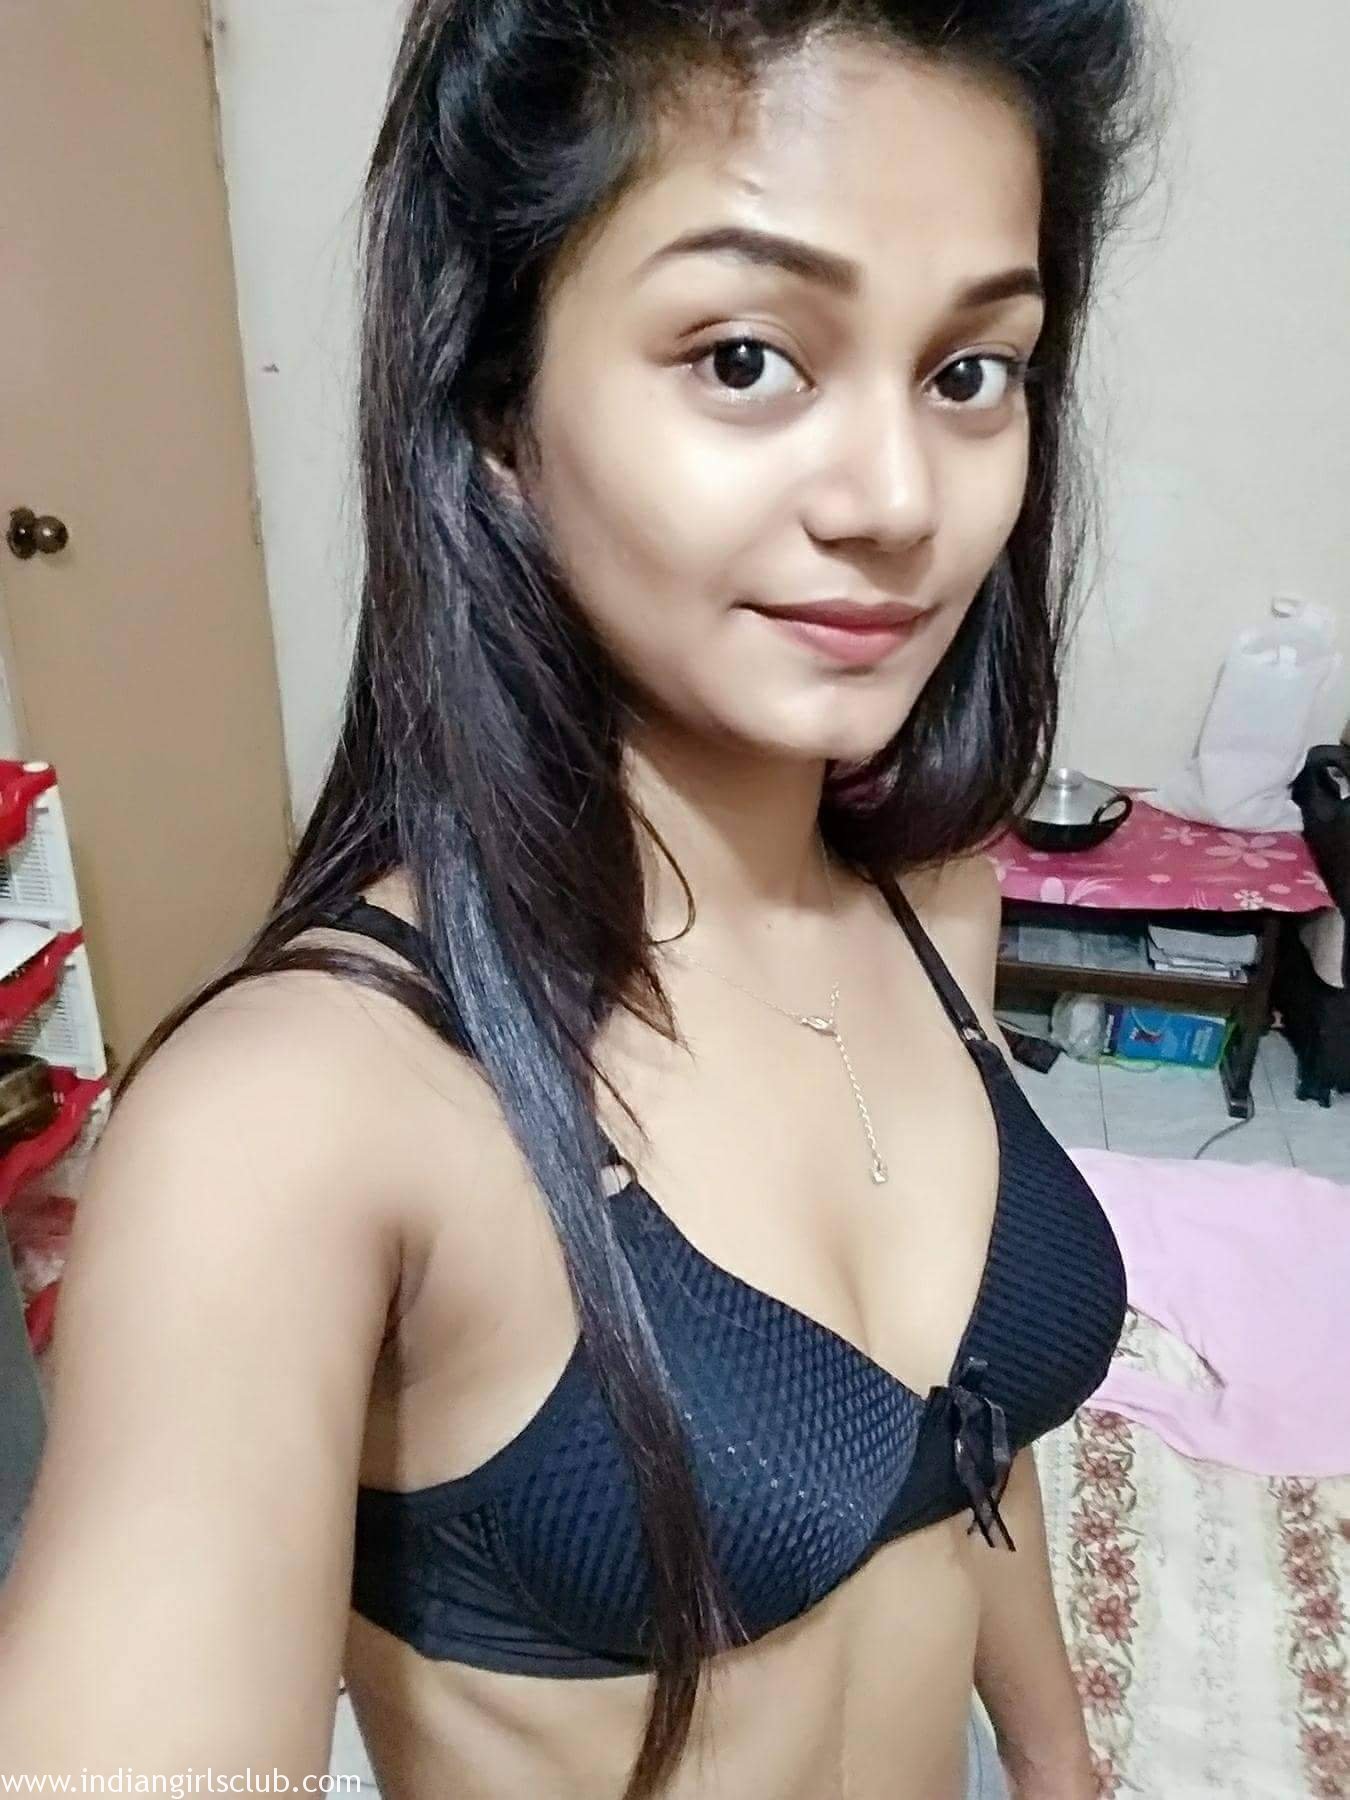 juicy_indian_teen_homemade_porn_20 - Indian Girls Club photo